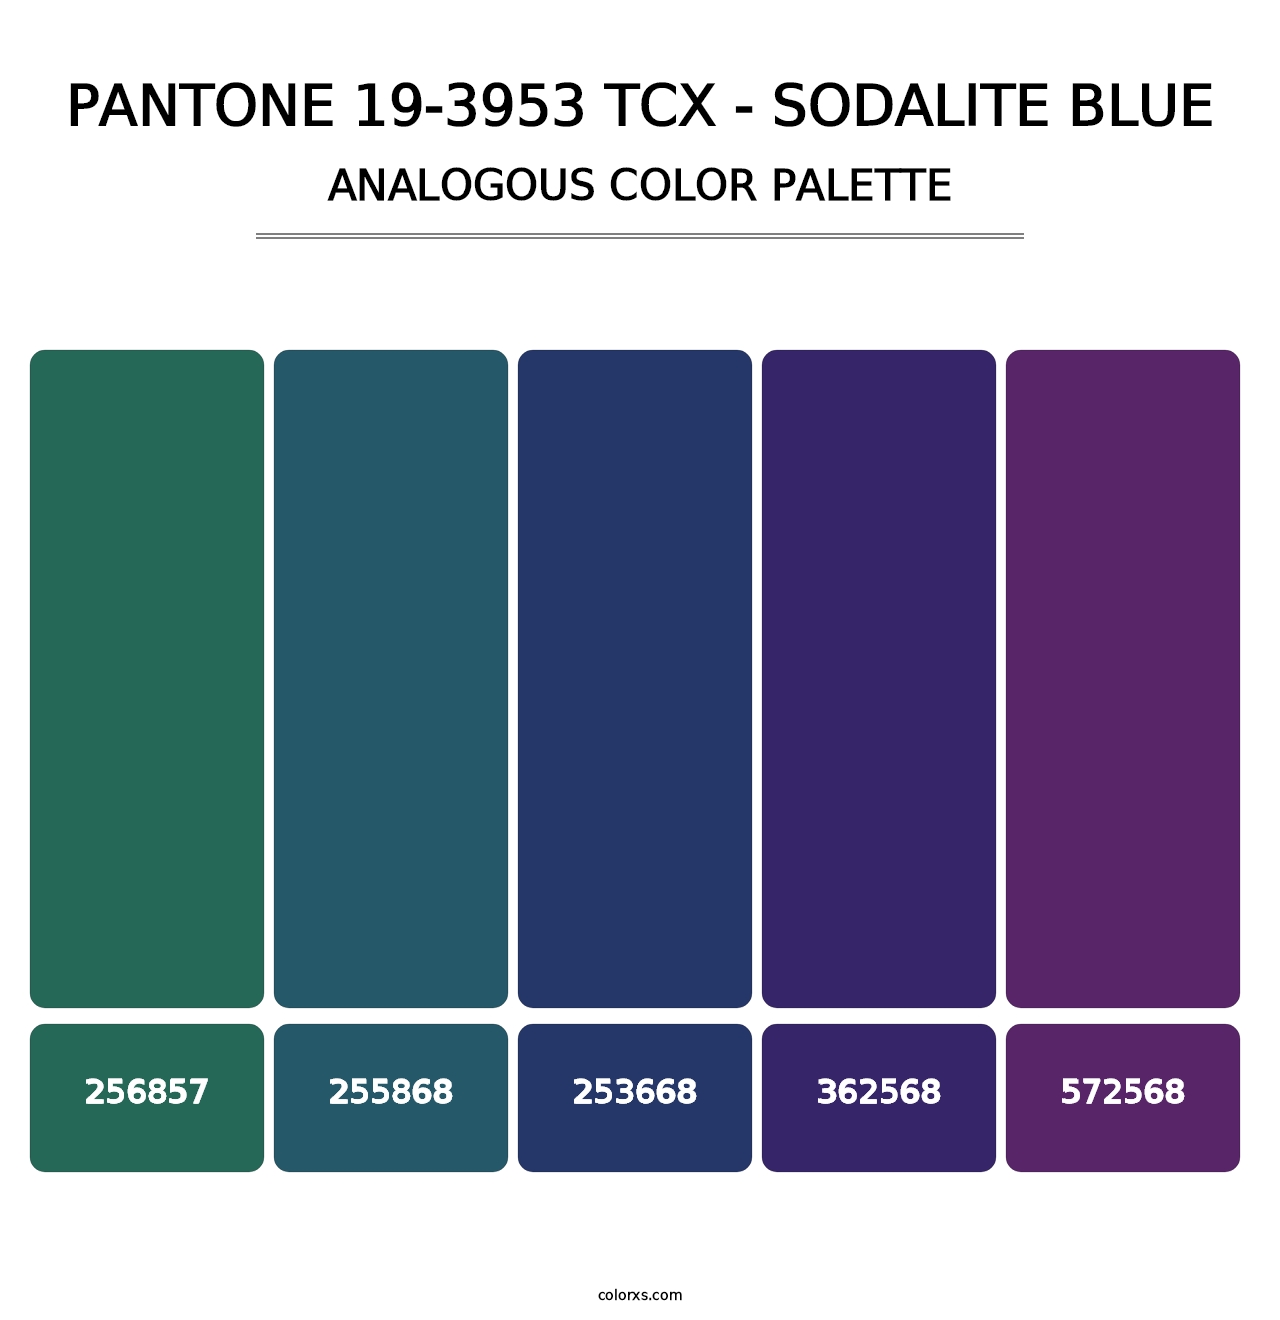 PANTONE 19-3953 TCX - Sodalite Blue - Analogous Color Palette